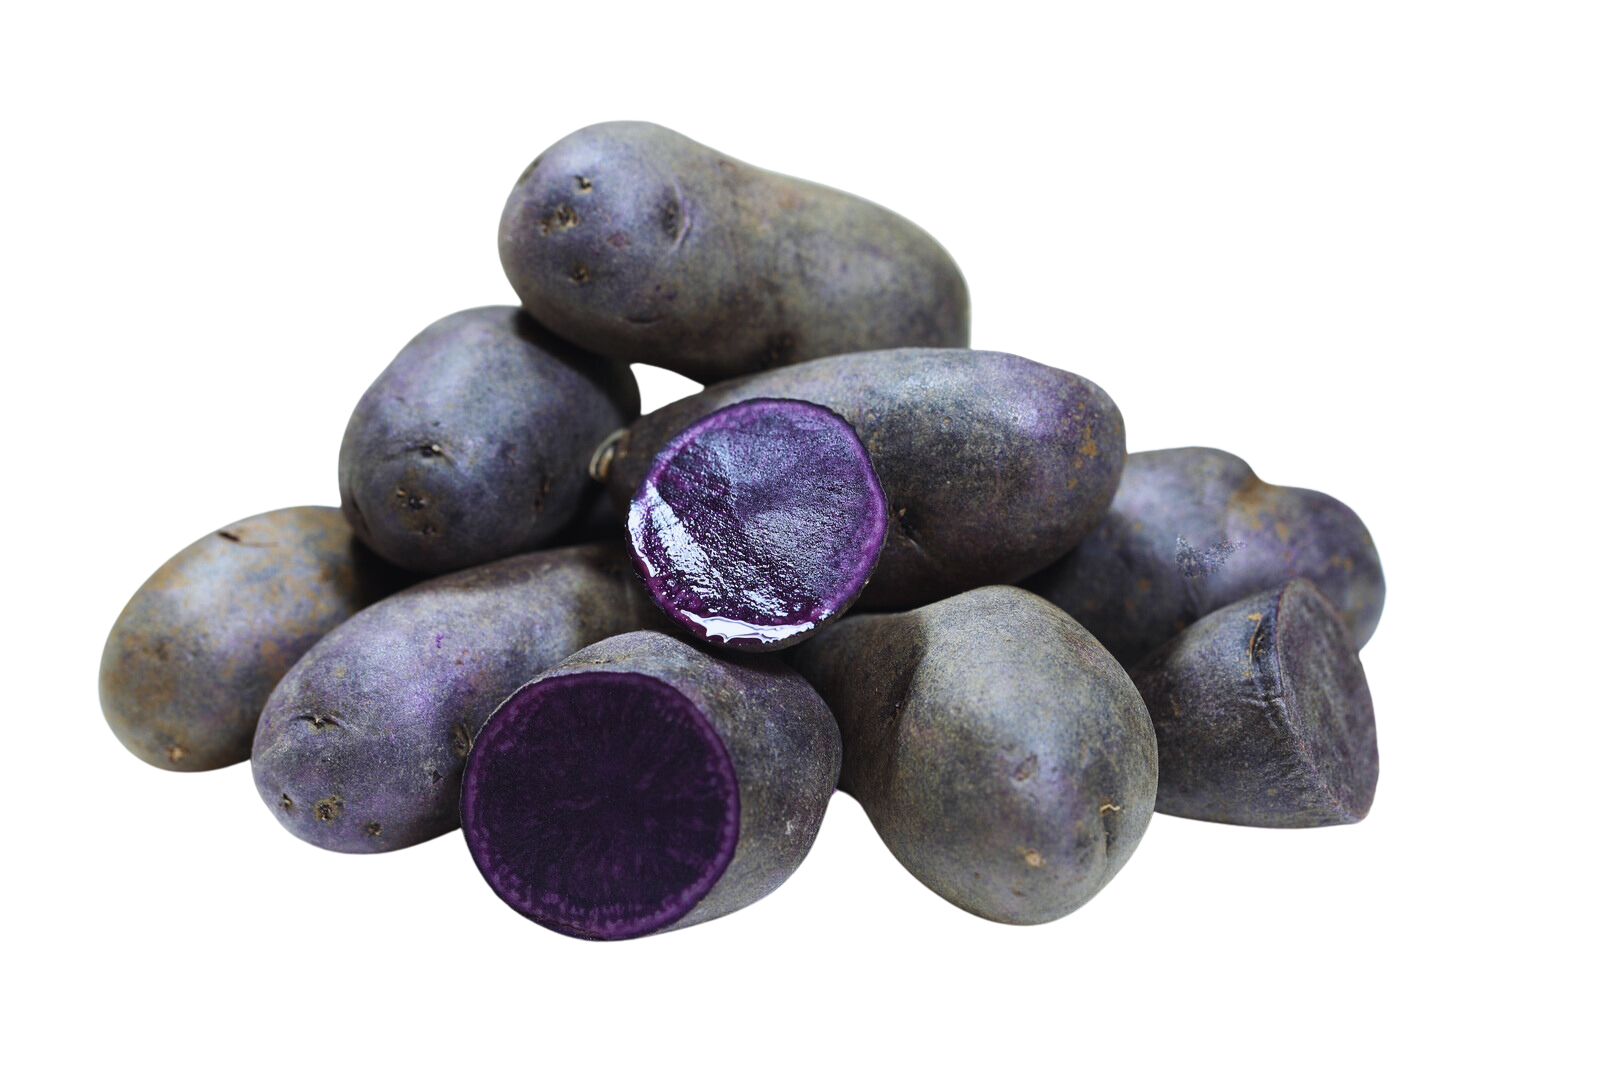 Organic Purple Peruvian Fingerling Potatoes - 1 LB